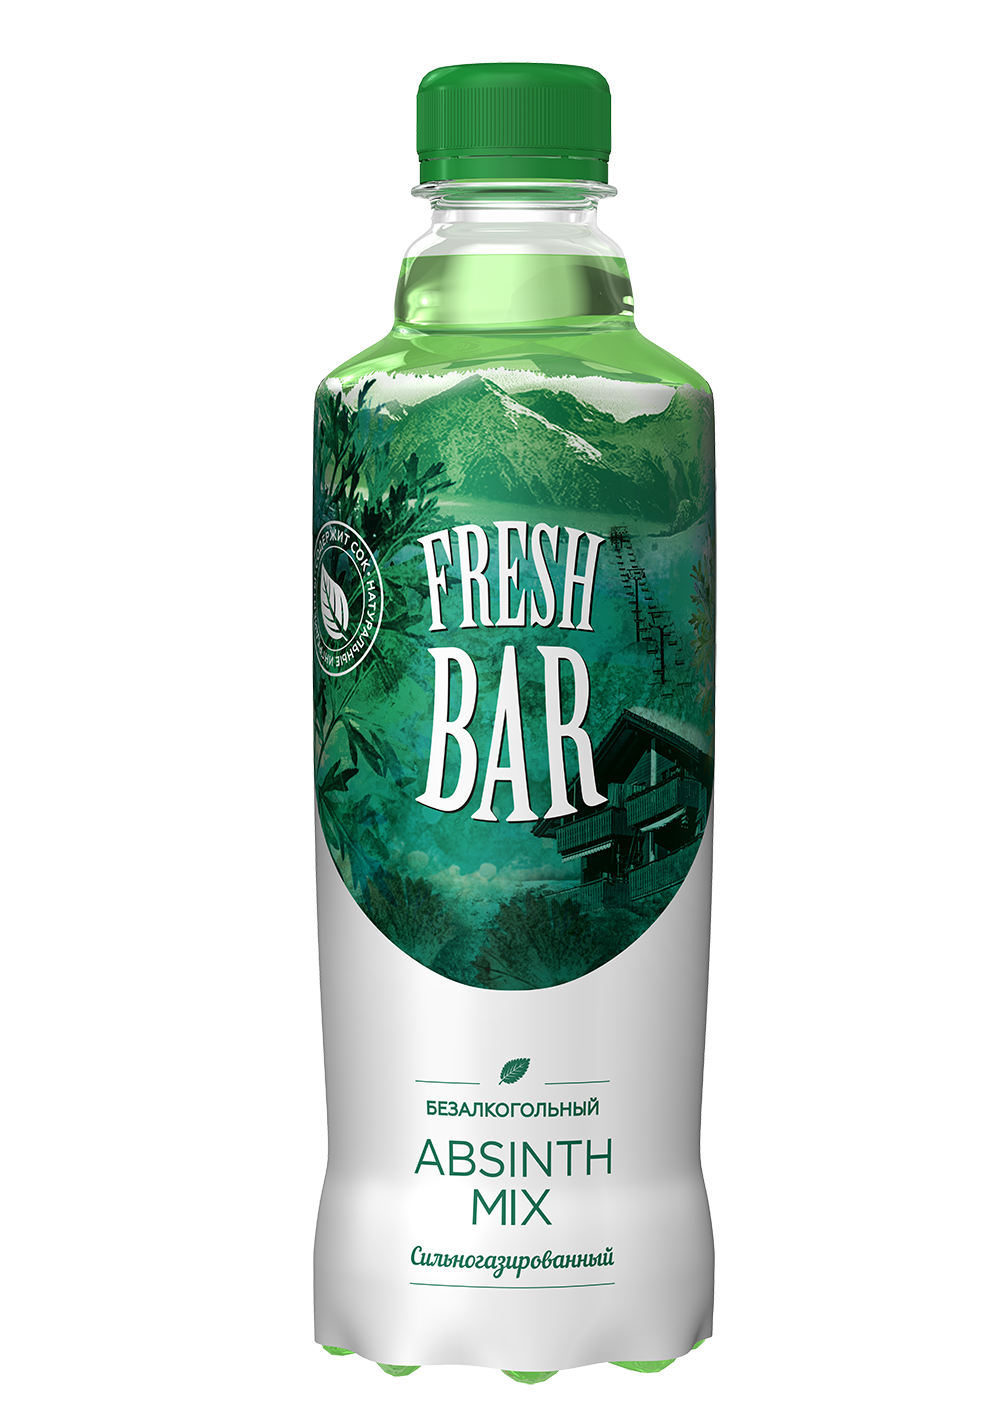 Напиток флеш бар. Fresh Bar Absinth Mix. Фреш бар вкусы. Absinthe Mix Фреш бар. 2 Литровый Фреш бар.